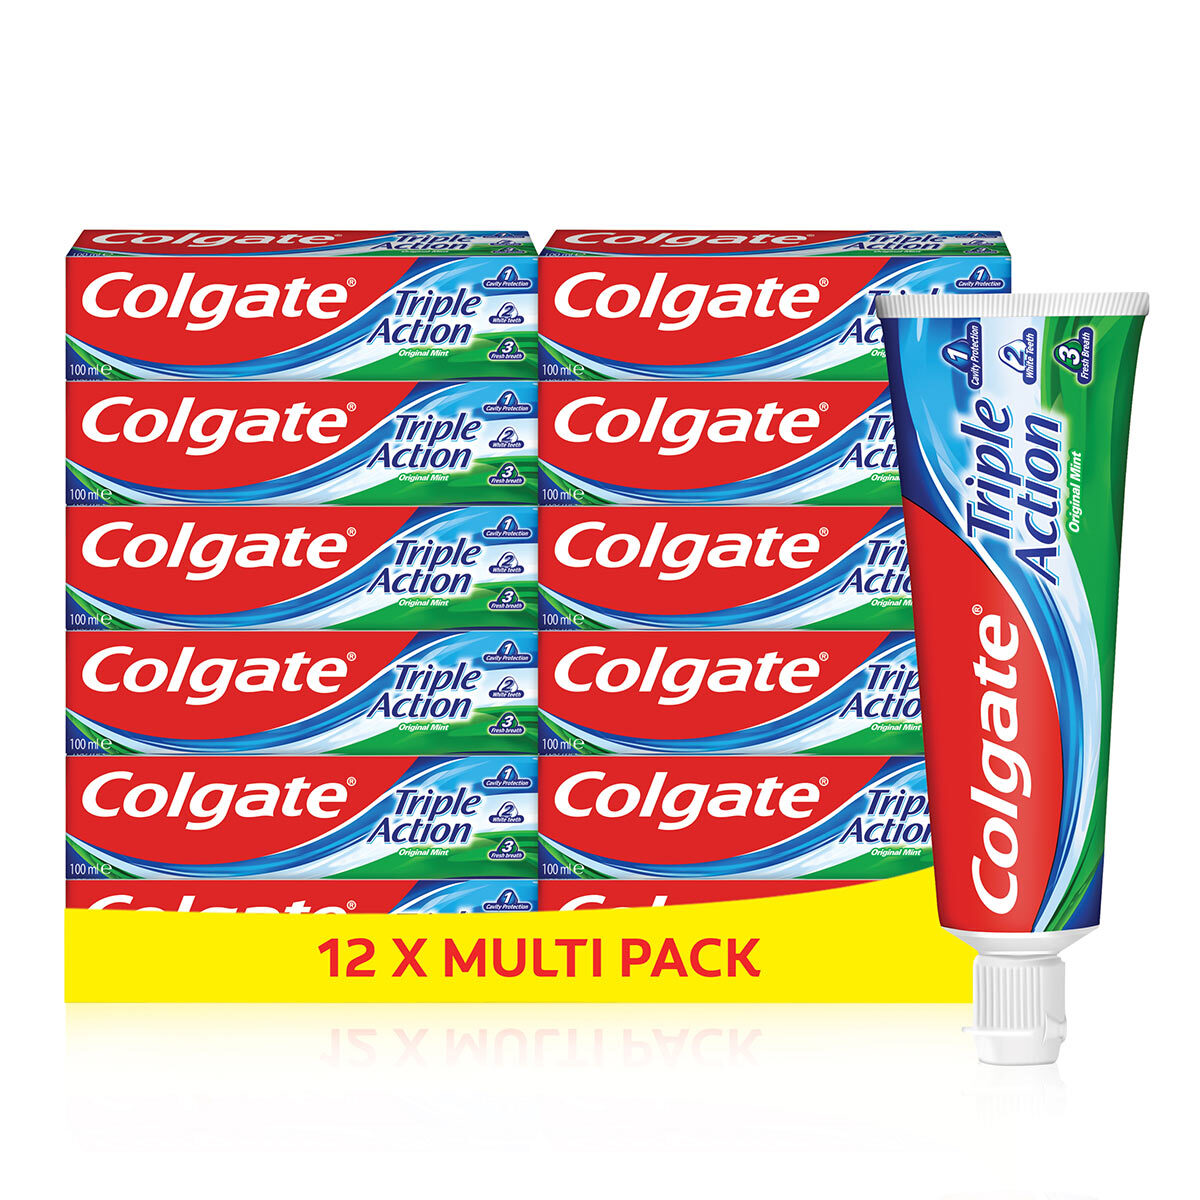 Colgate Triple Action Toothpaste, 12 x 100ml